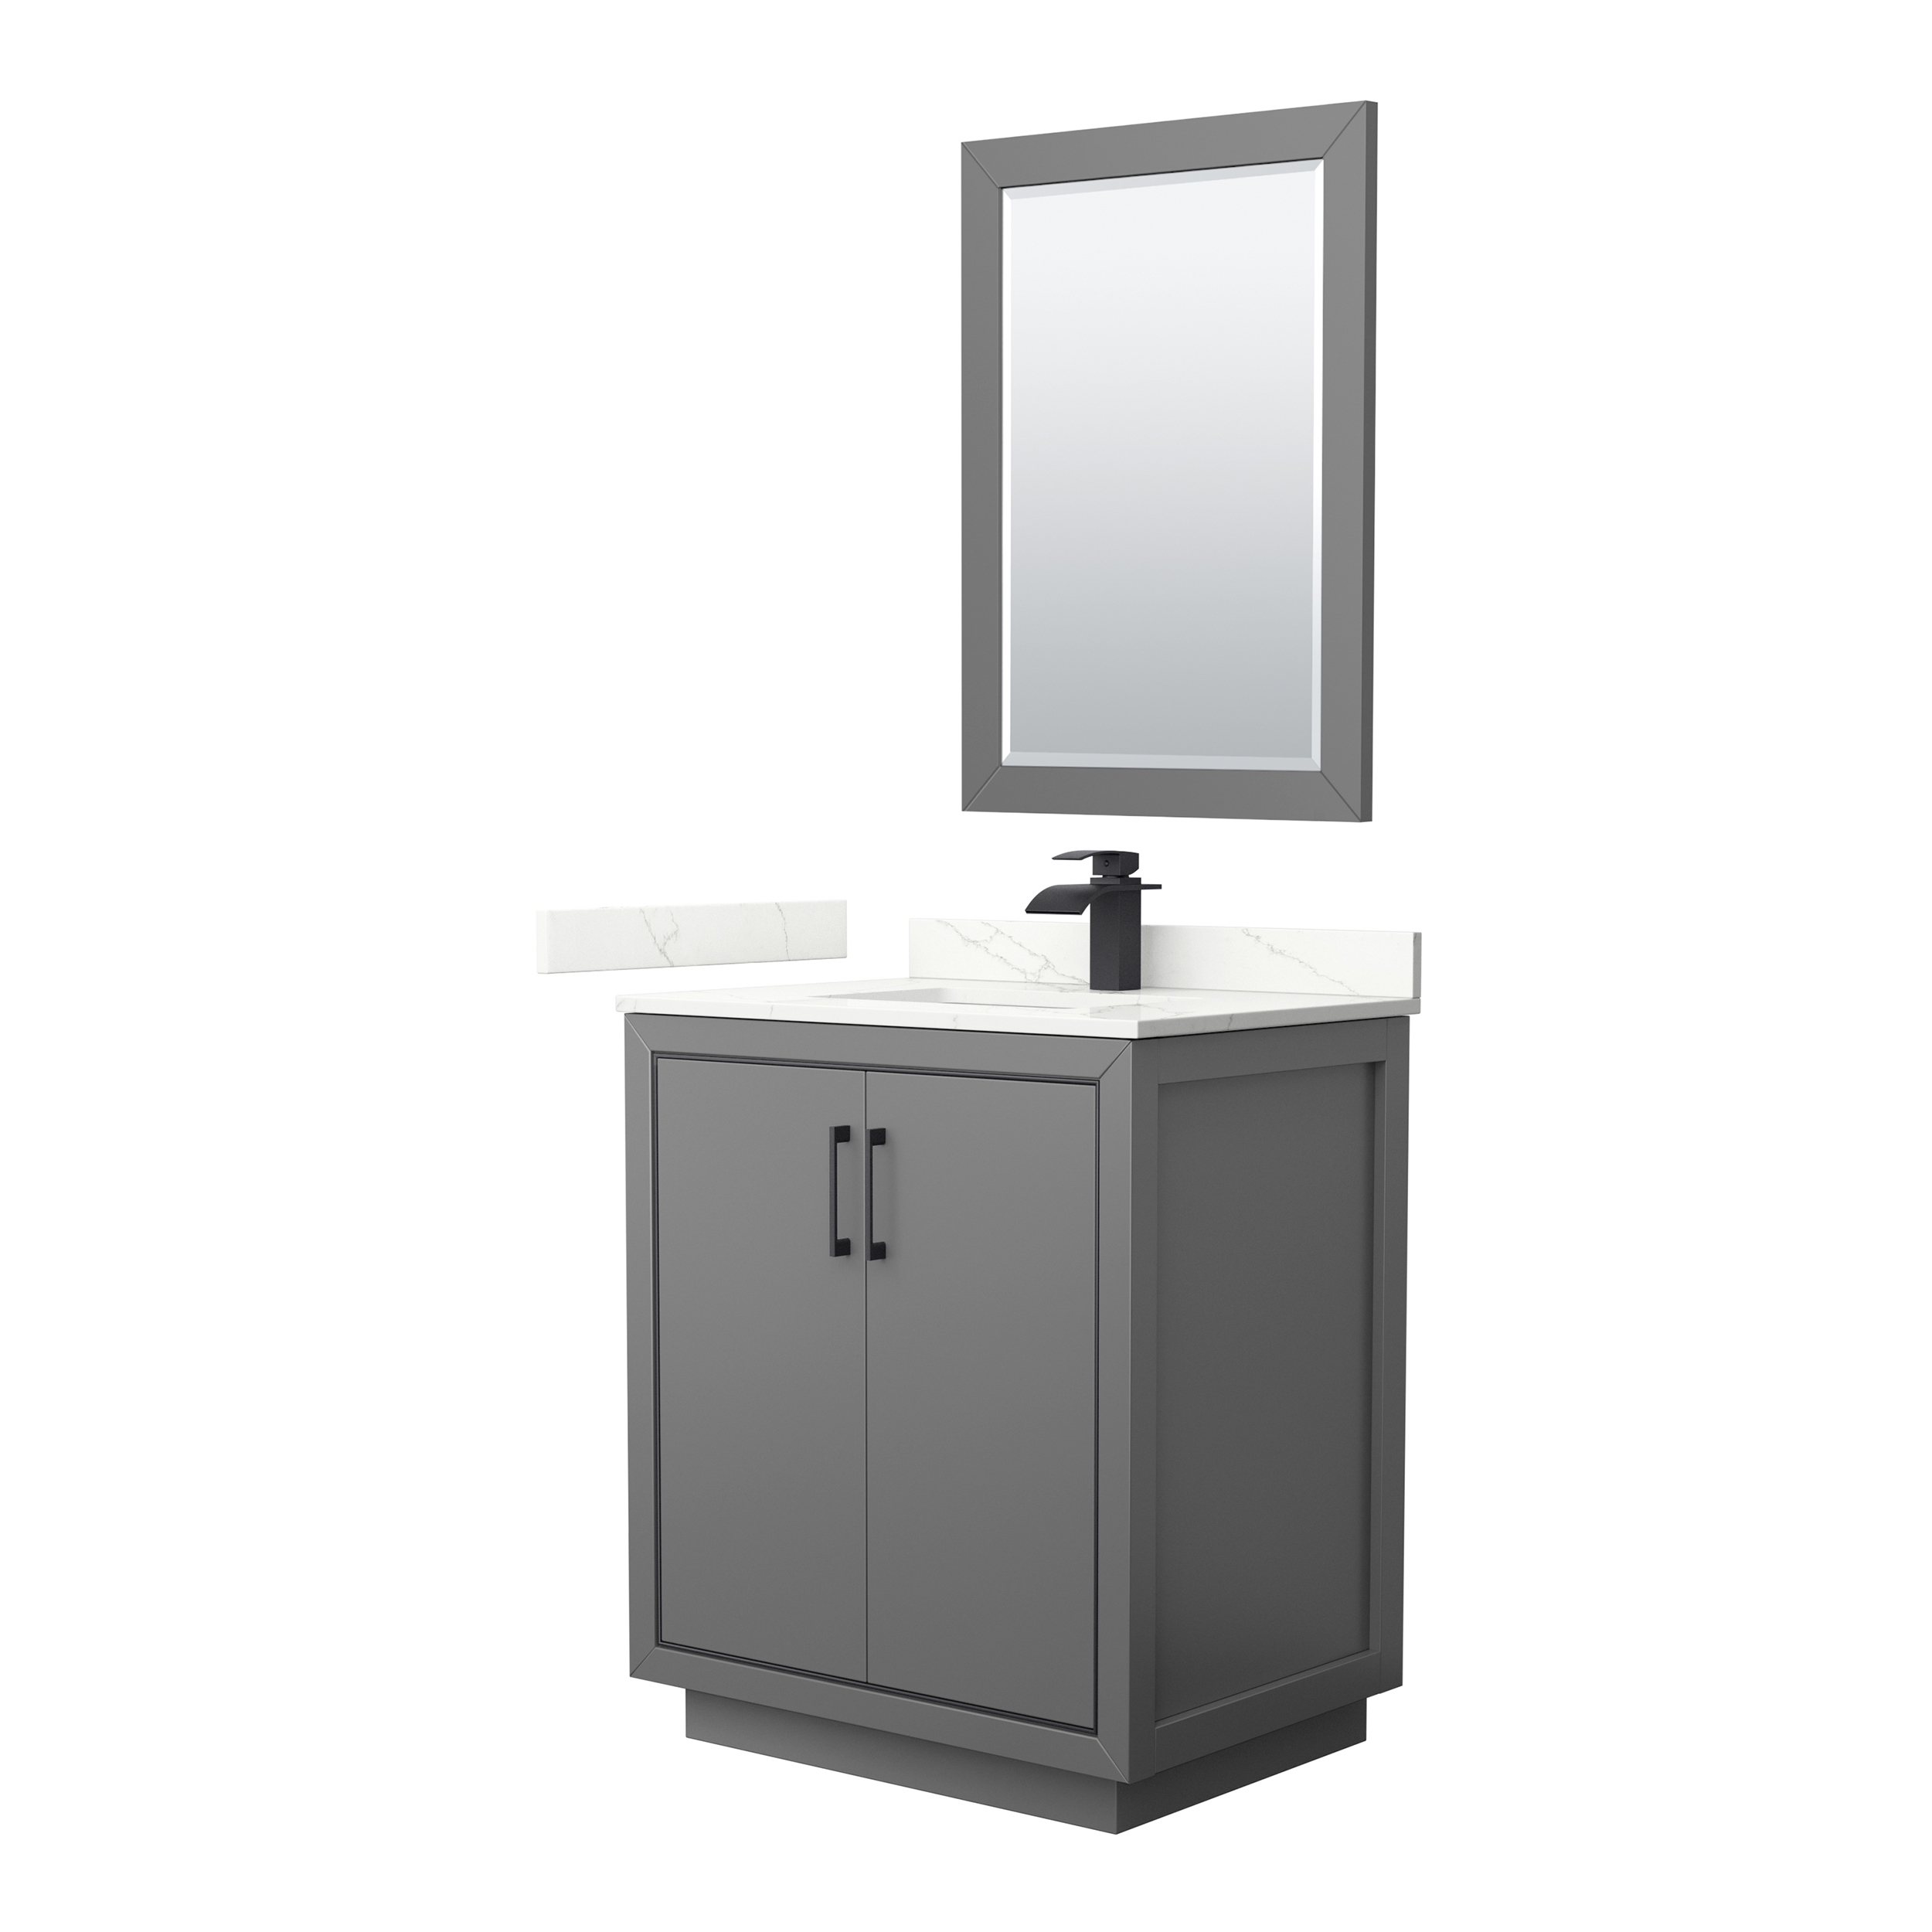 icon 30" single vanity with optional quartz or carrara marble counter - dark gray